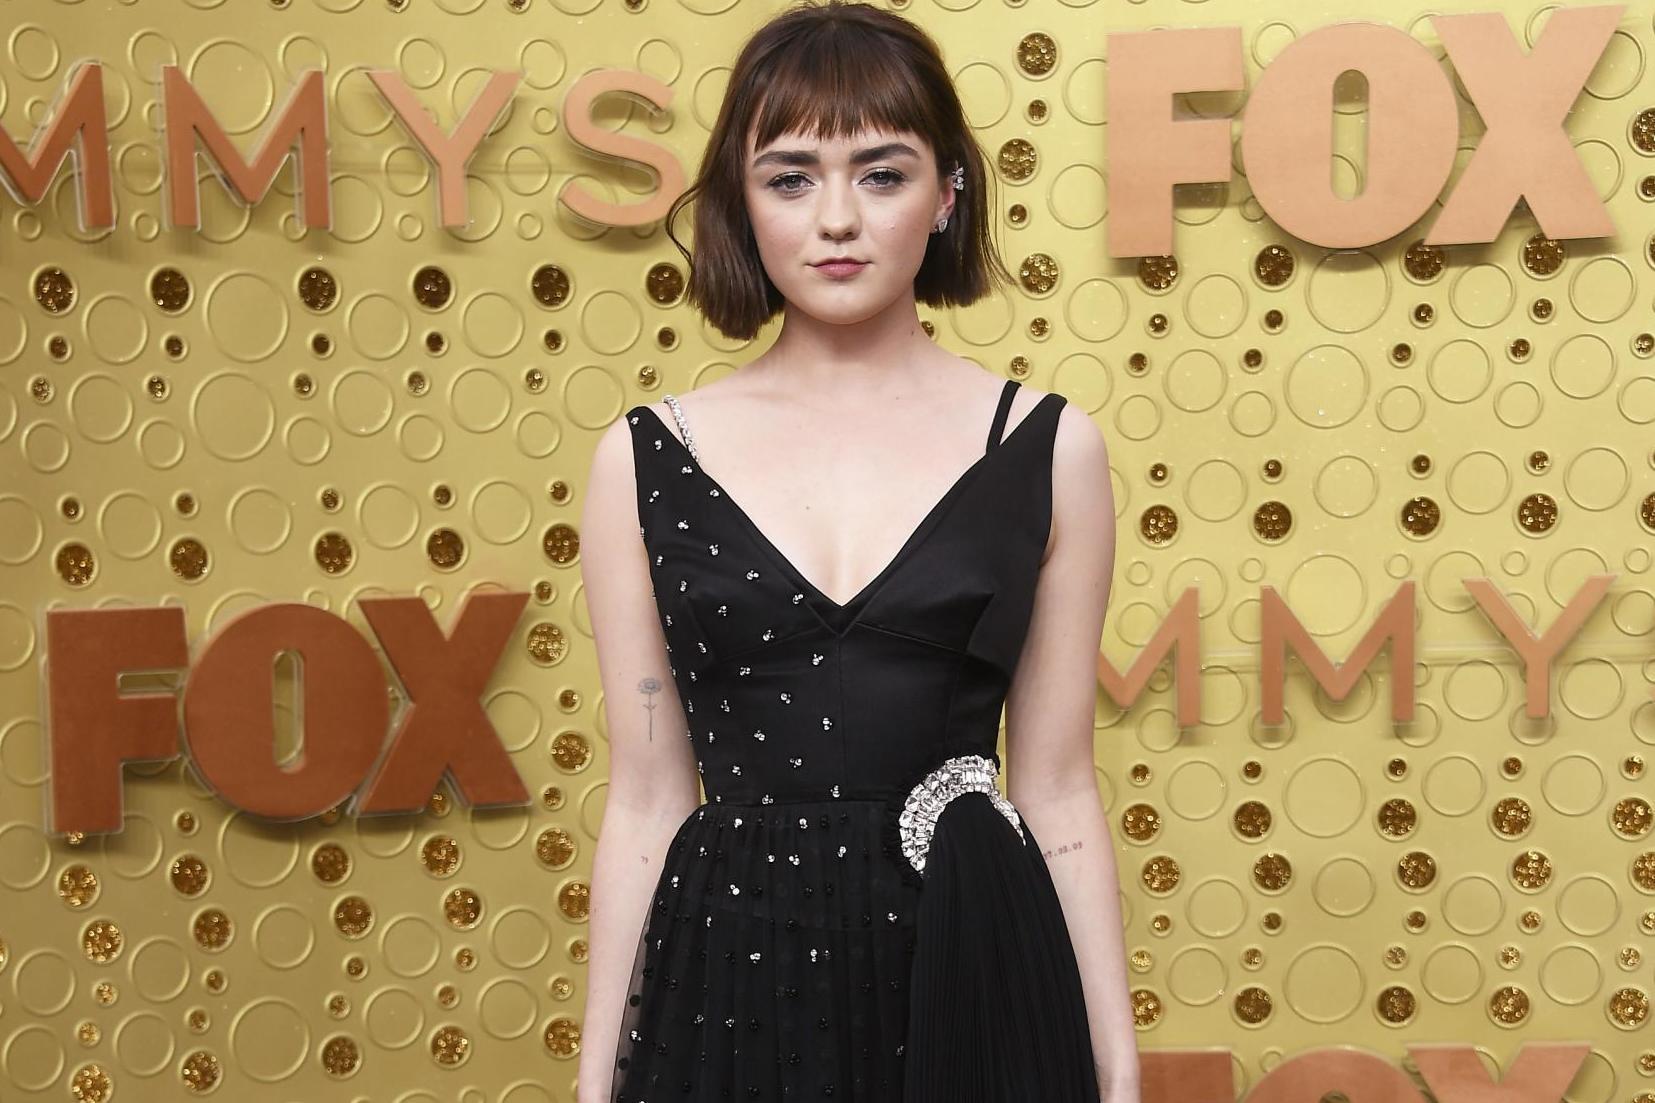 Maisie Williams says playing Arya Stark made her 'ashamed' of her body